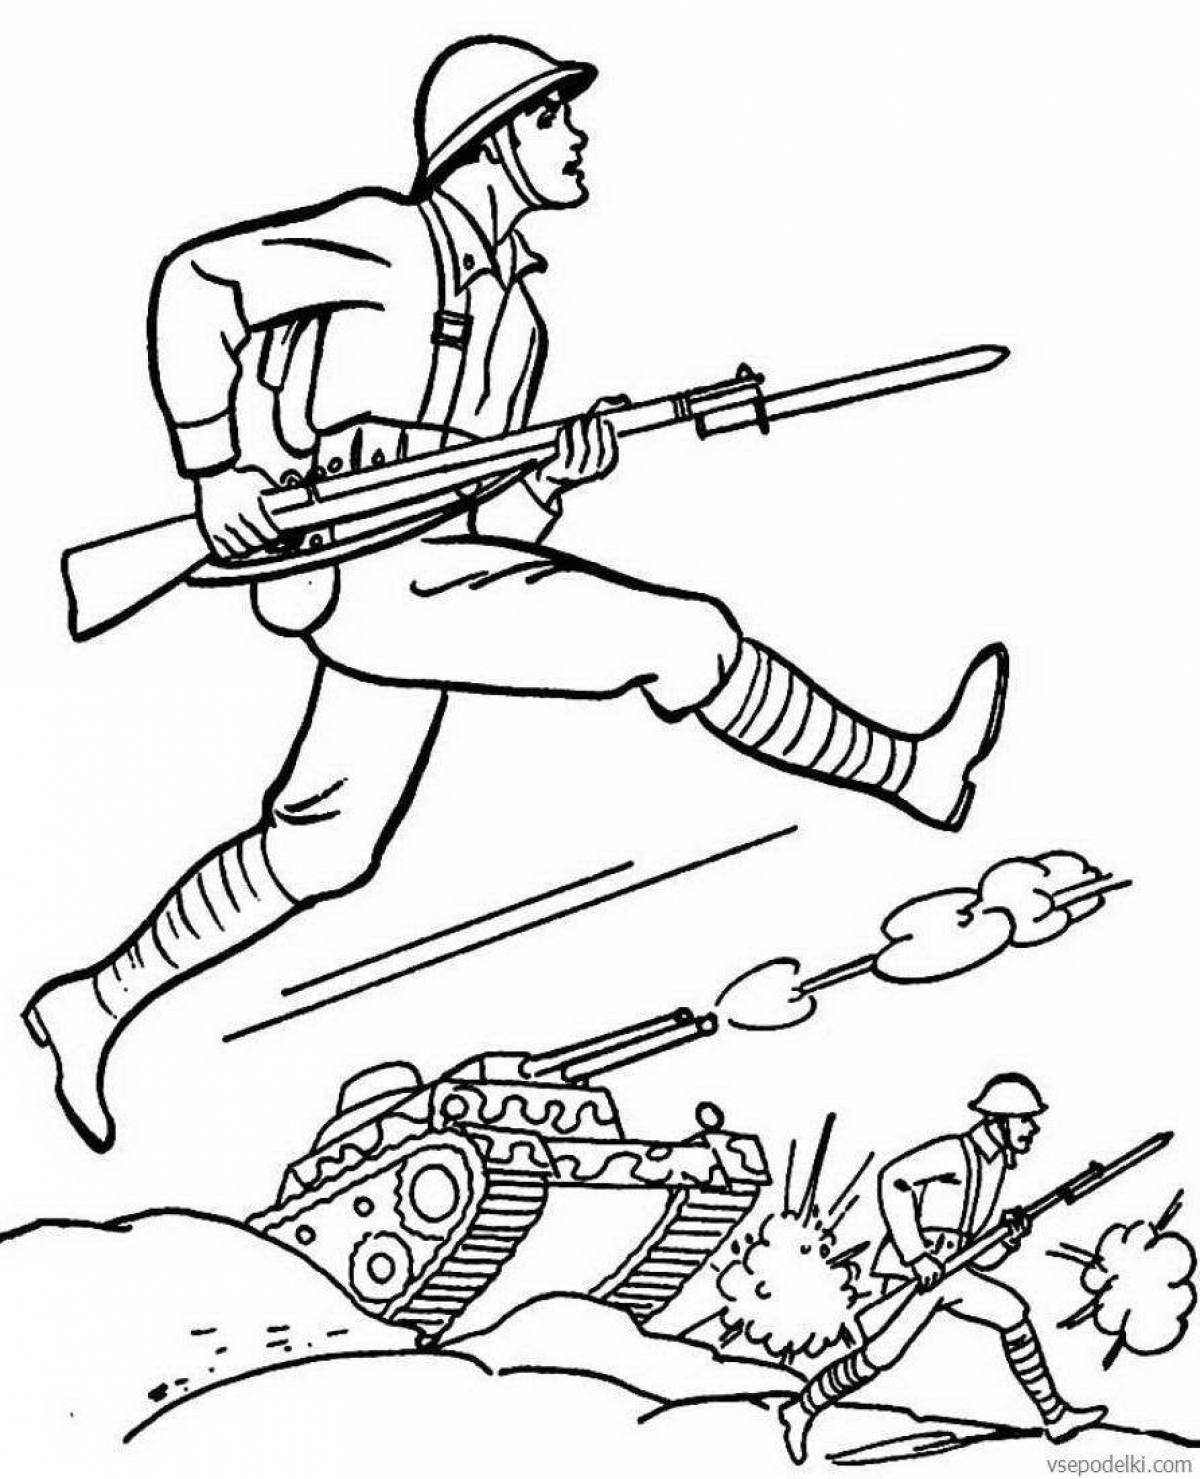 World War II drama coloring page